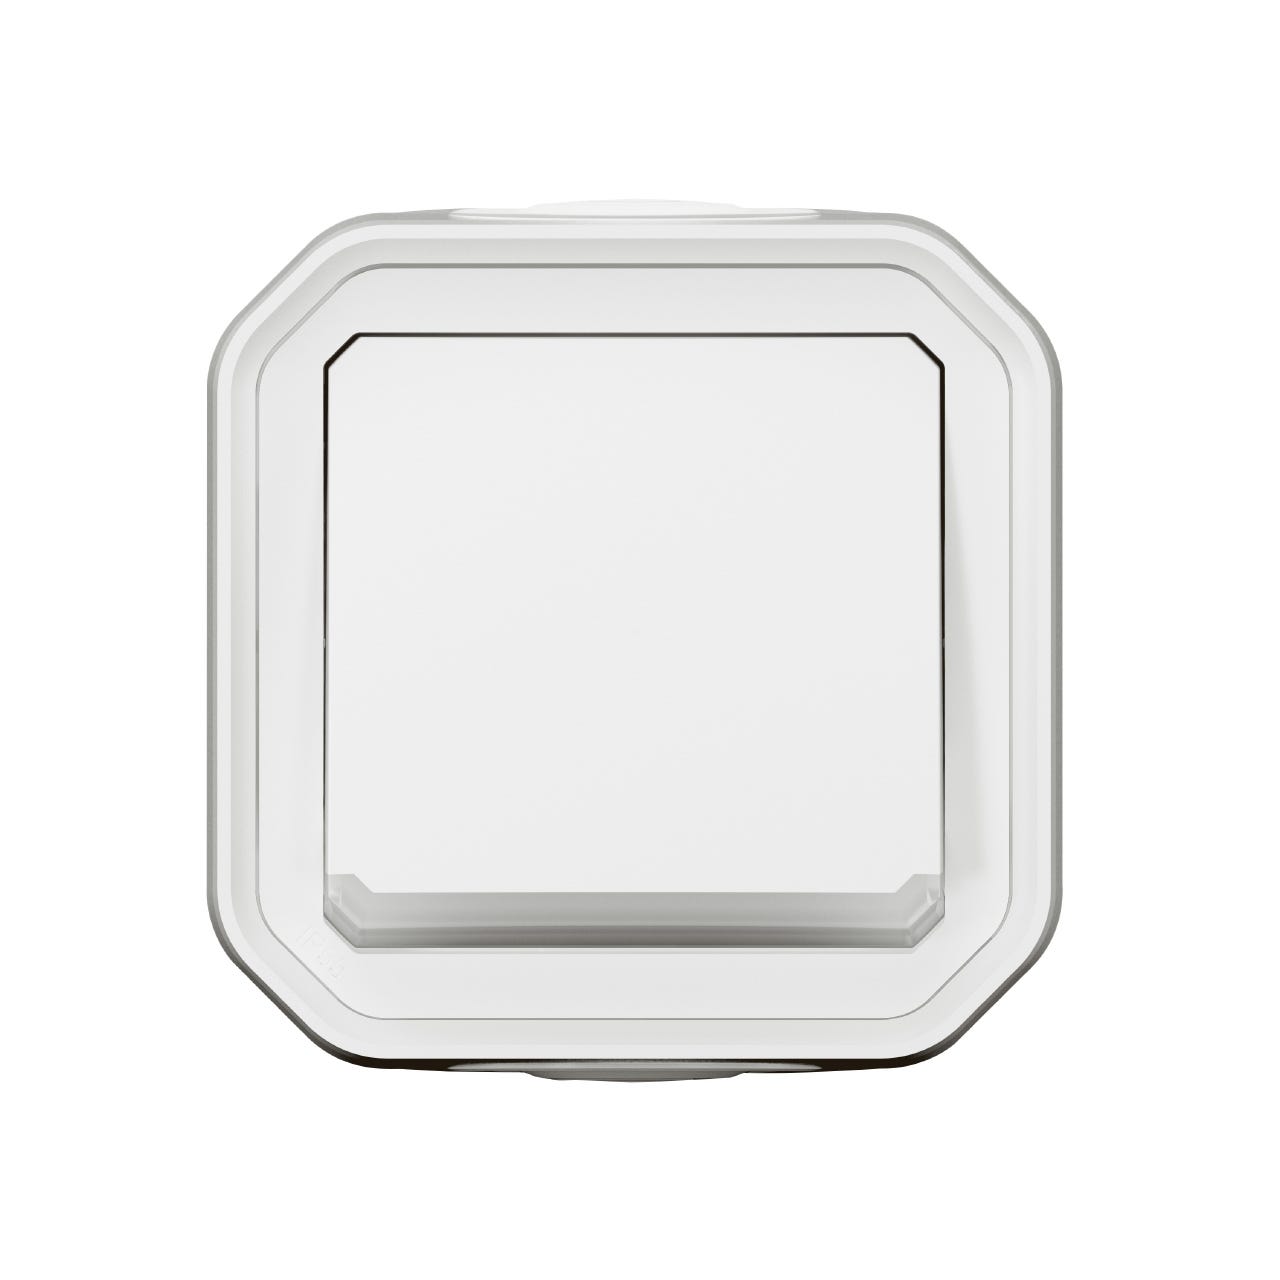 bouton poussoir - no - lumineux - blanc - saillie - legrand plexo 069762l 0